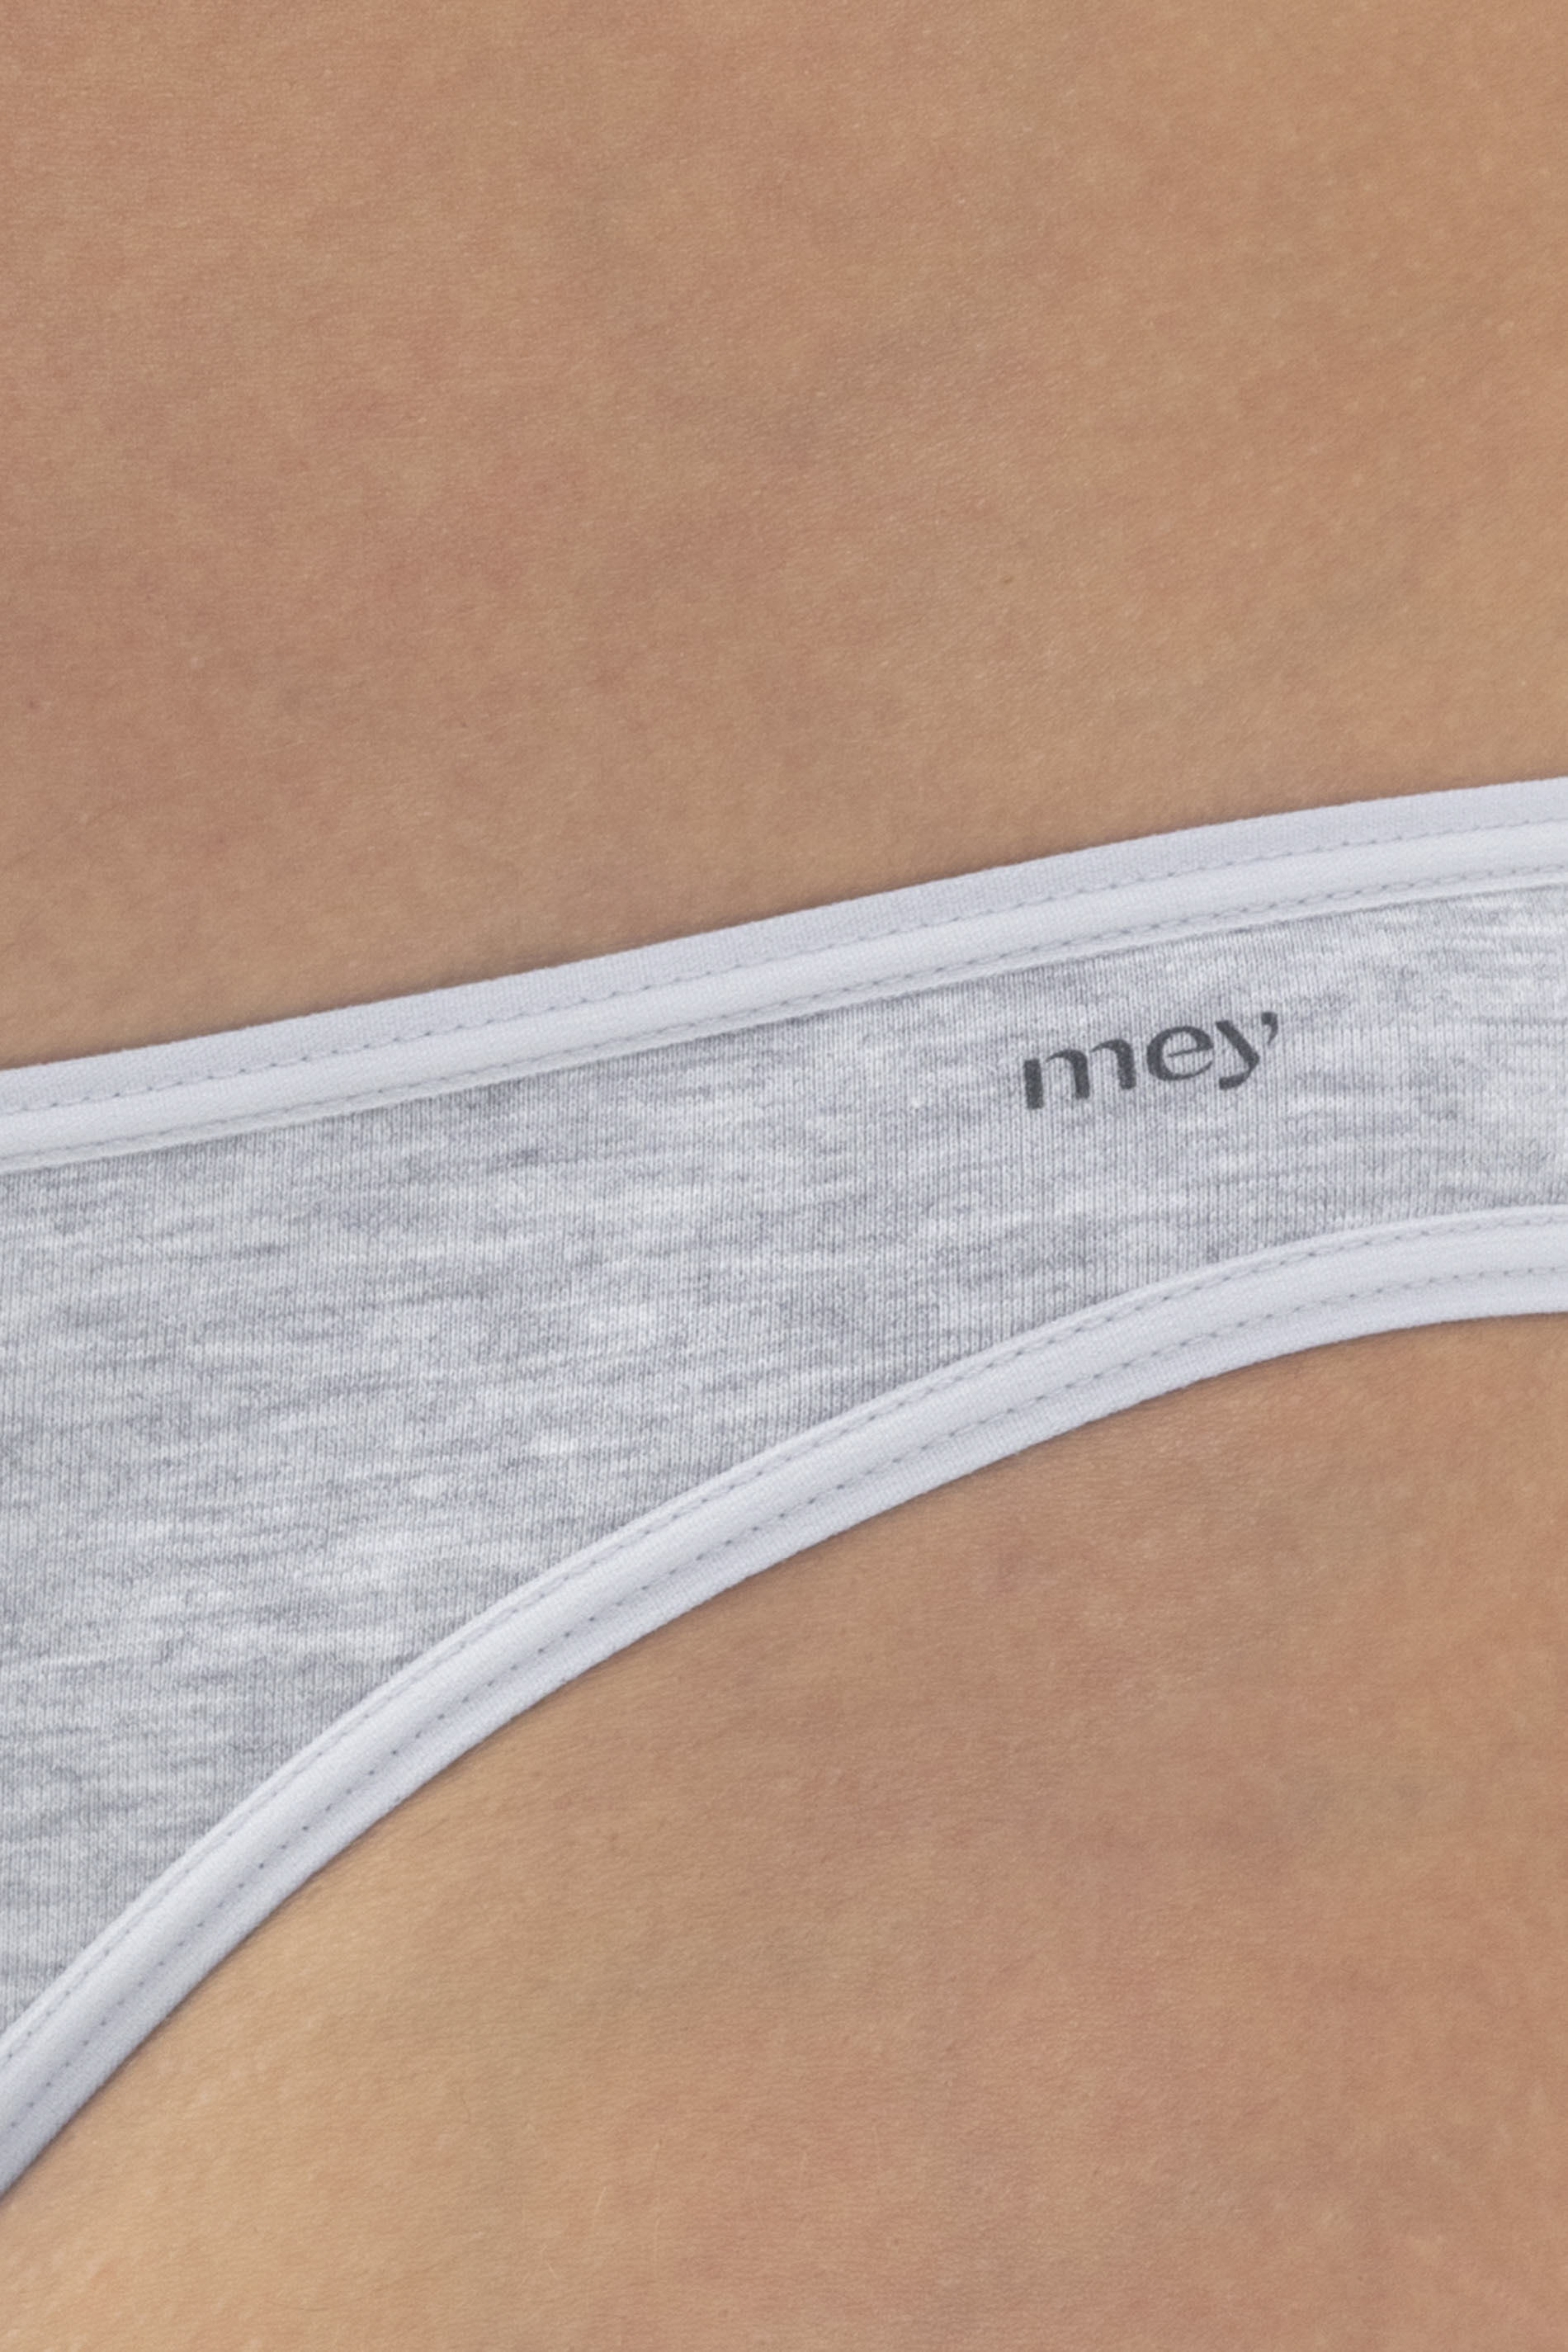 Mini-Slip Light Grey Melange Serie Cotton Pure Detailansicht 01 | mey®